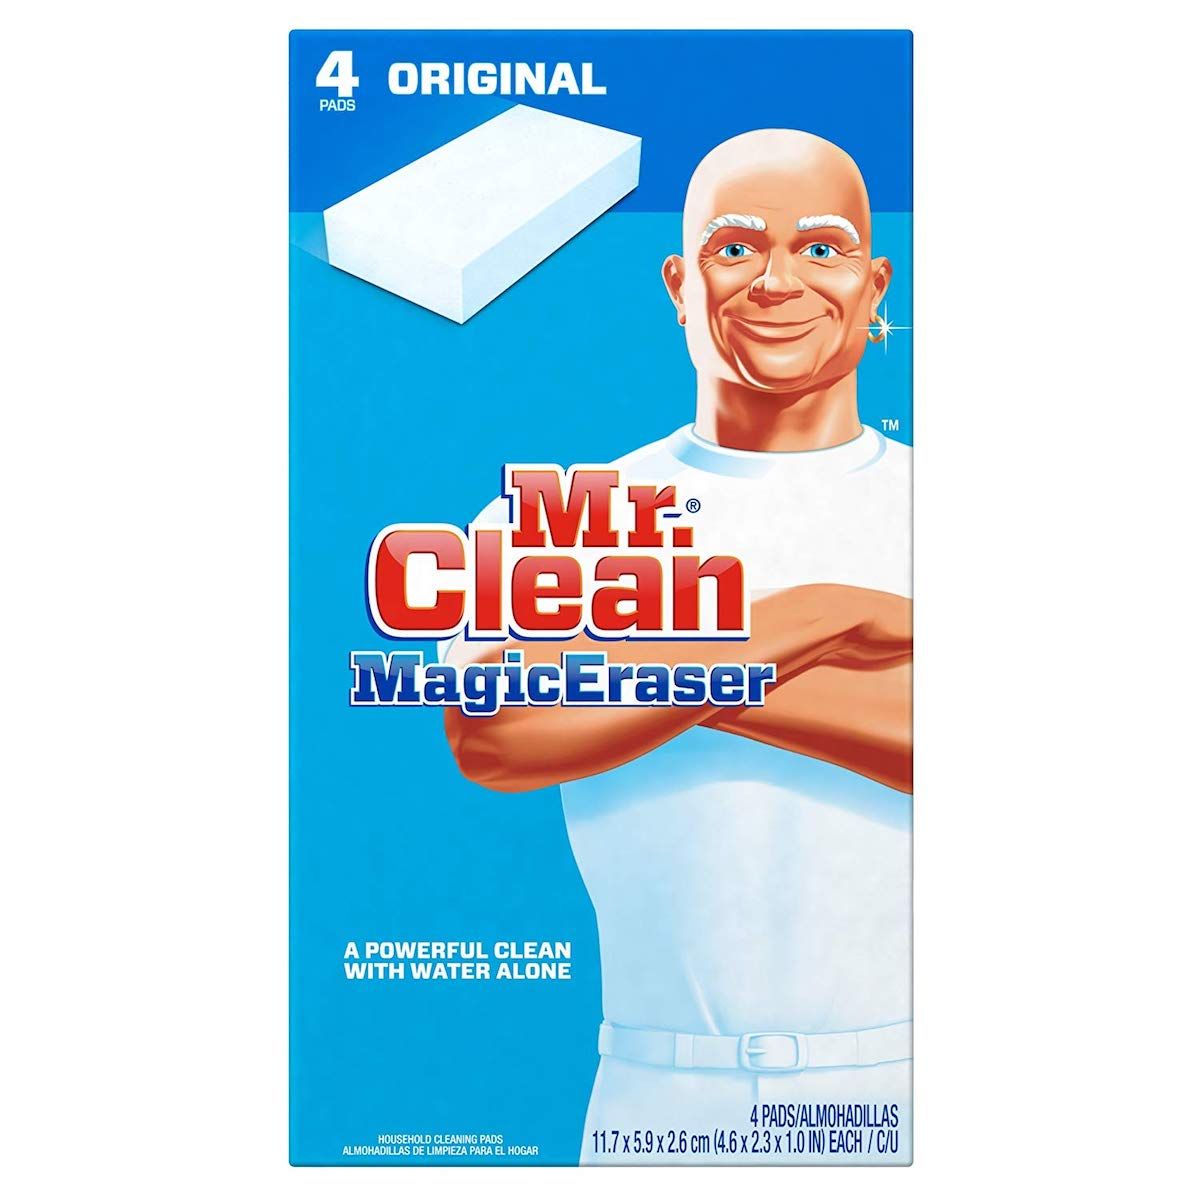 Mr. Clean Magic Radiergummi